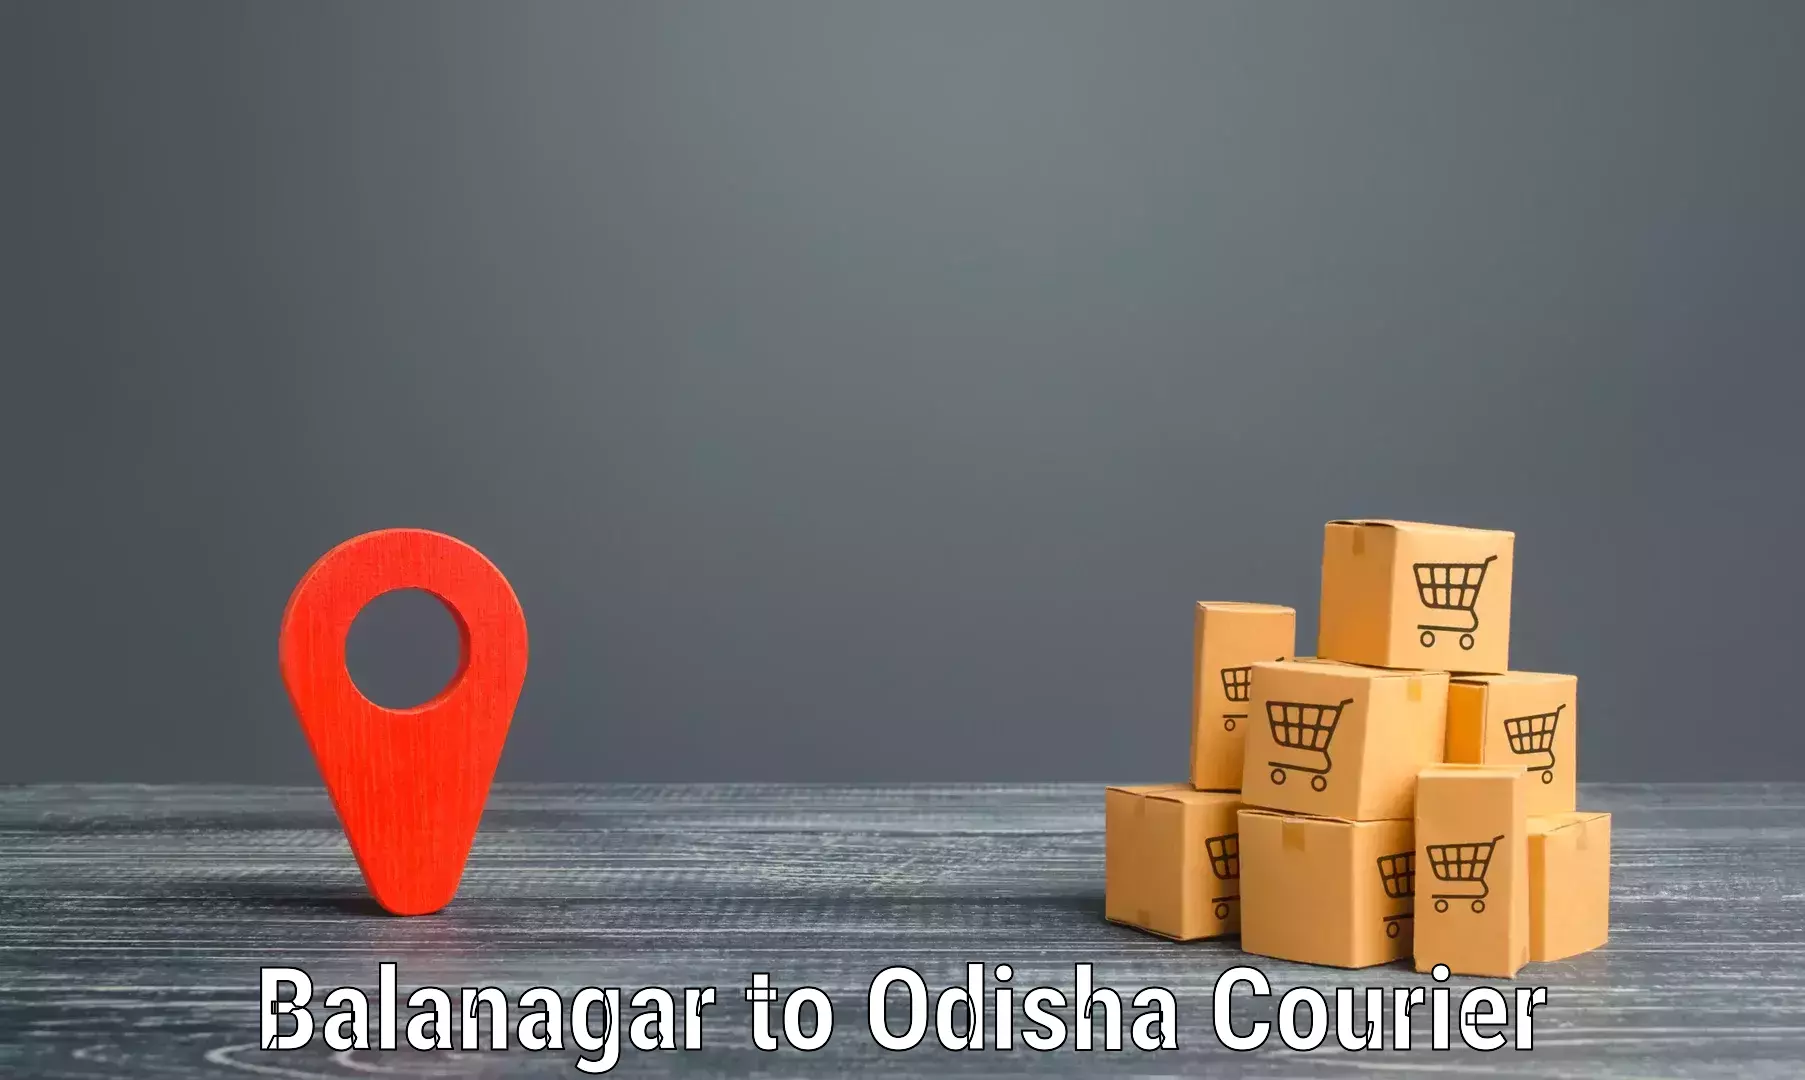 Quick dispatch service Balanagar to Sambalpur